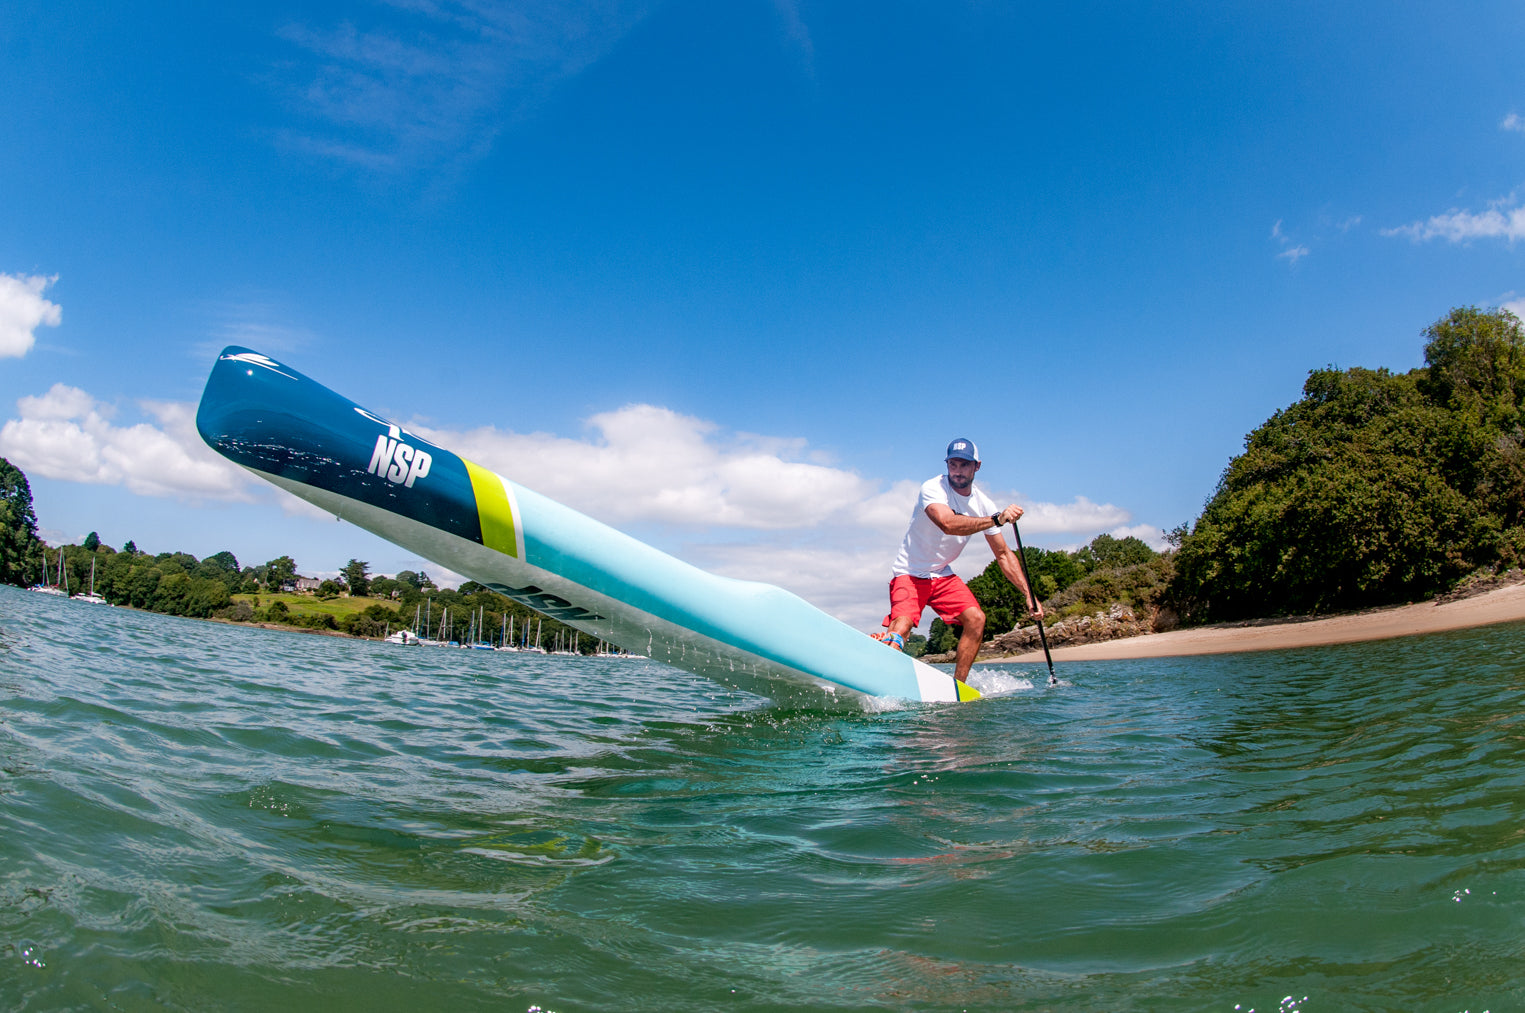 Nsp Tabla Paddle Surf Race Carolina Pro Carbon 14´0´´ Blanco